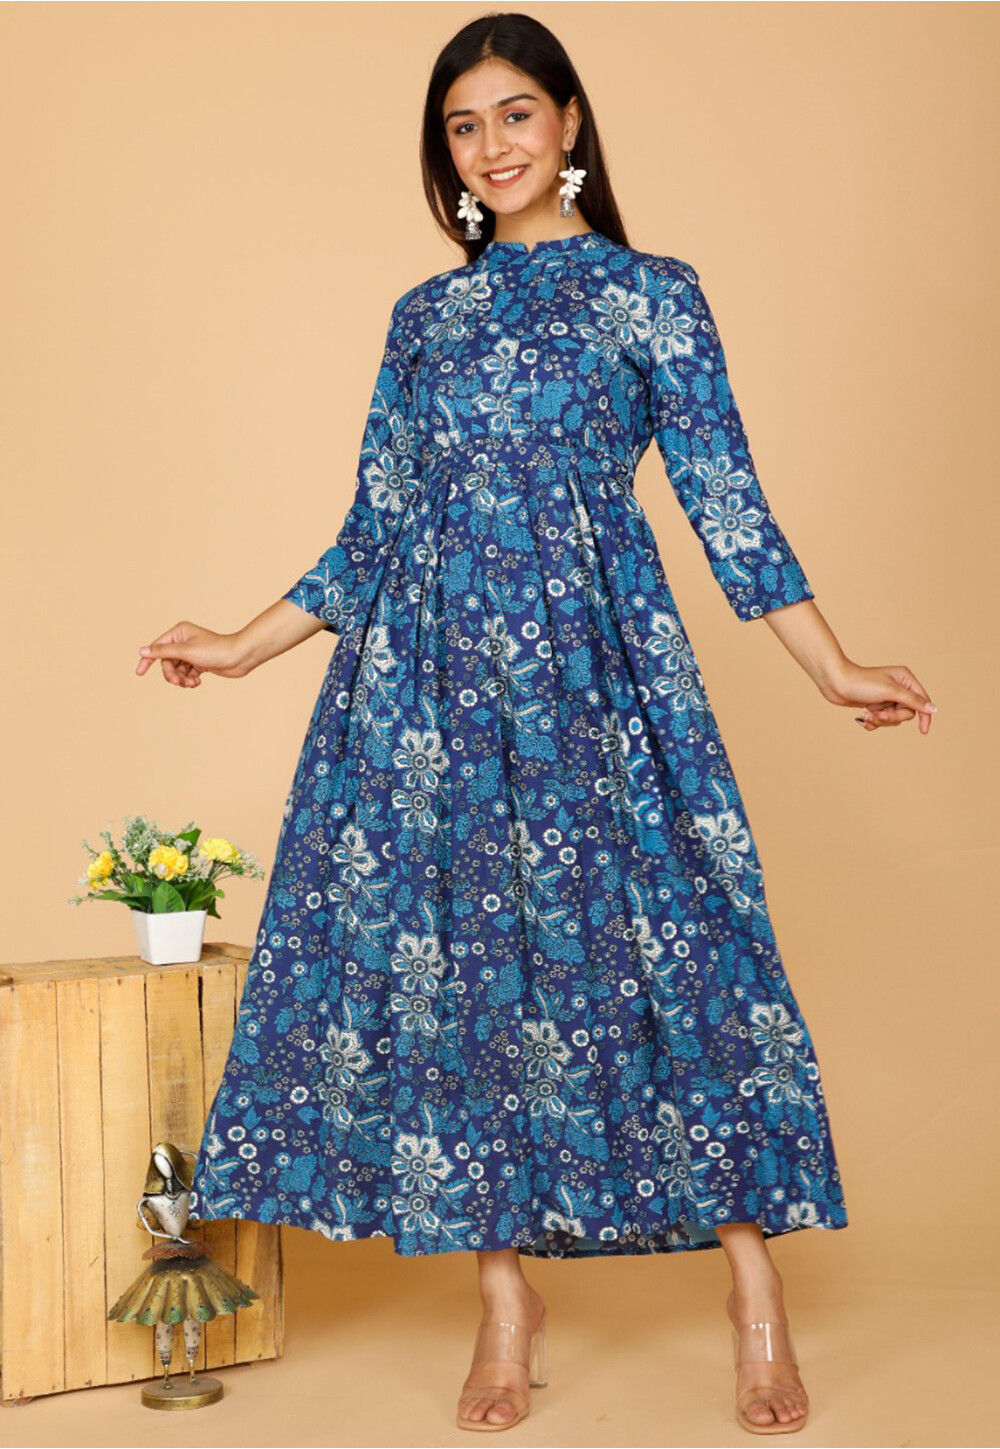 Buy Printed Rayon Midi Dress in Navy Blue Online : TAN314 - Utsav Fashion